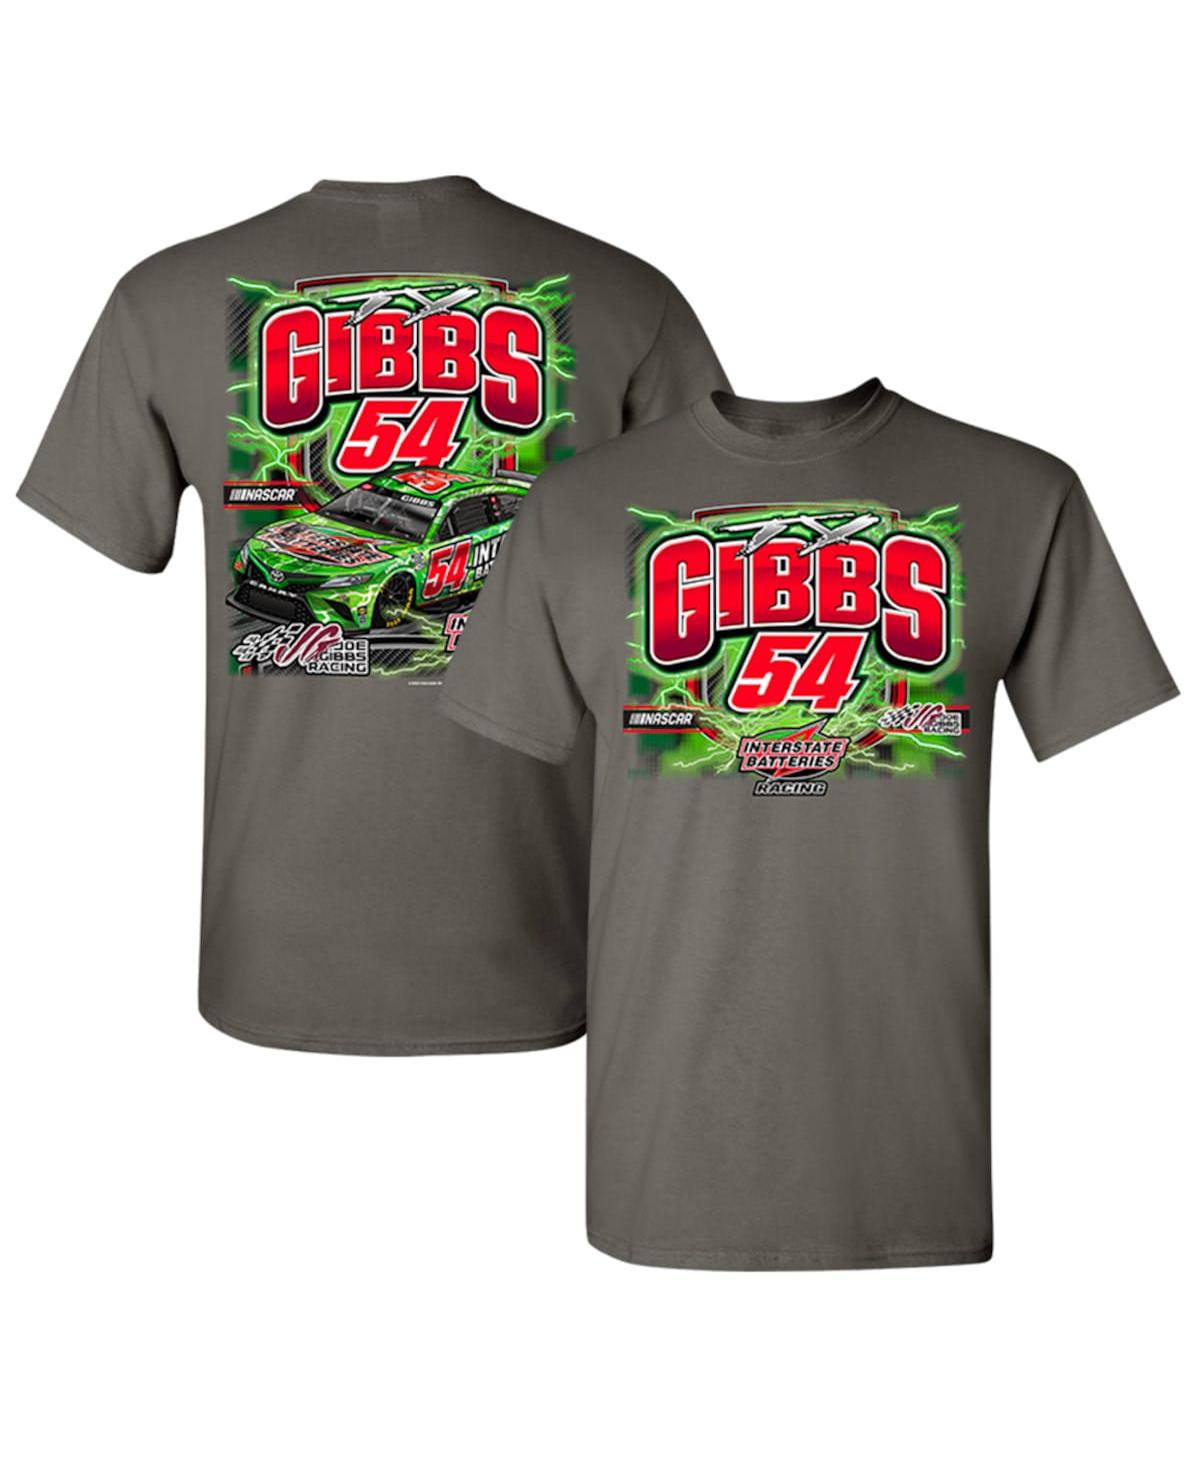 Men's Joe Gibbs Racing Team Collection Charcoal Ty Gibbs Interstate Batteries Car T-shirt - Charcoal